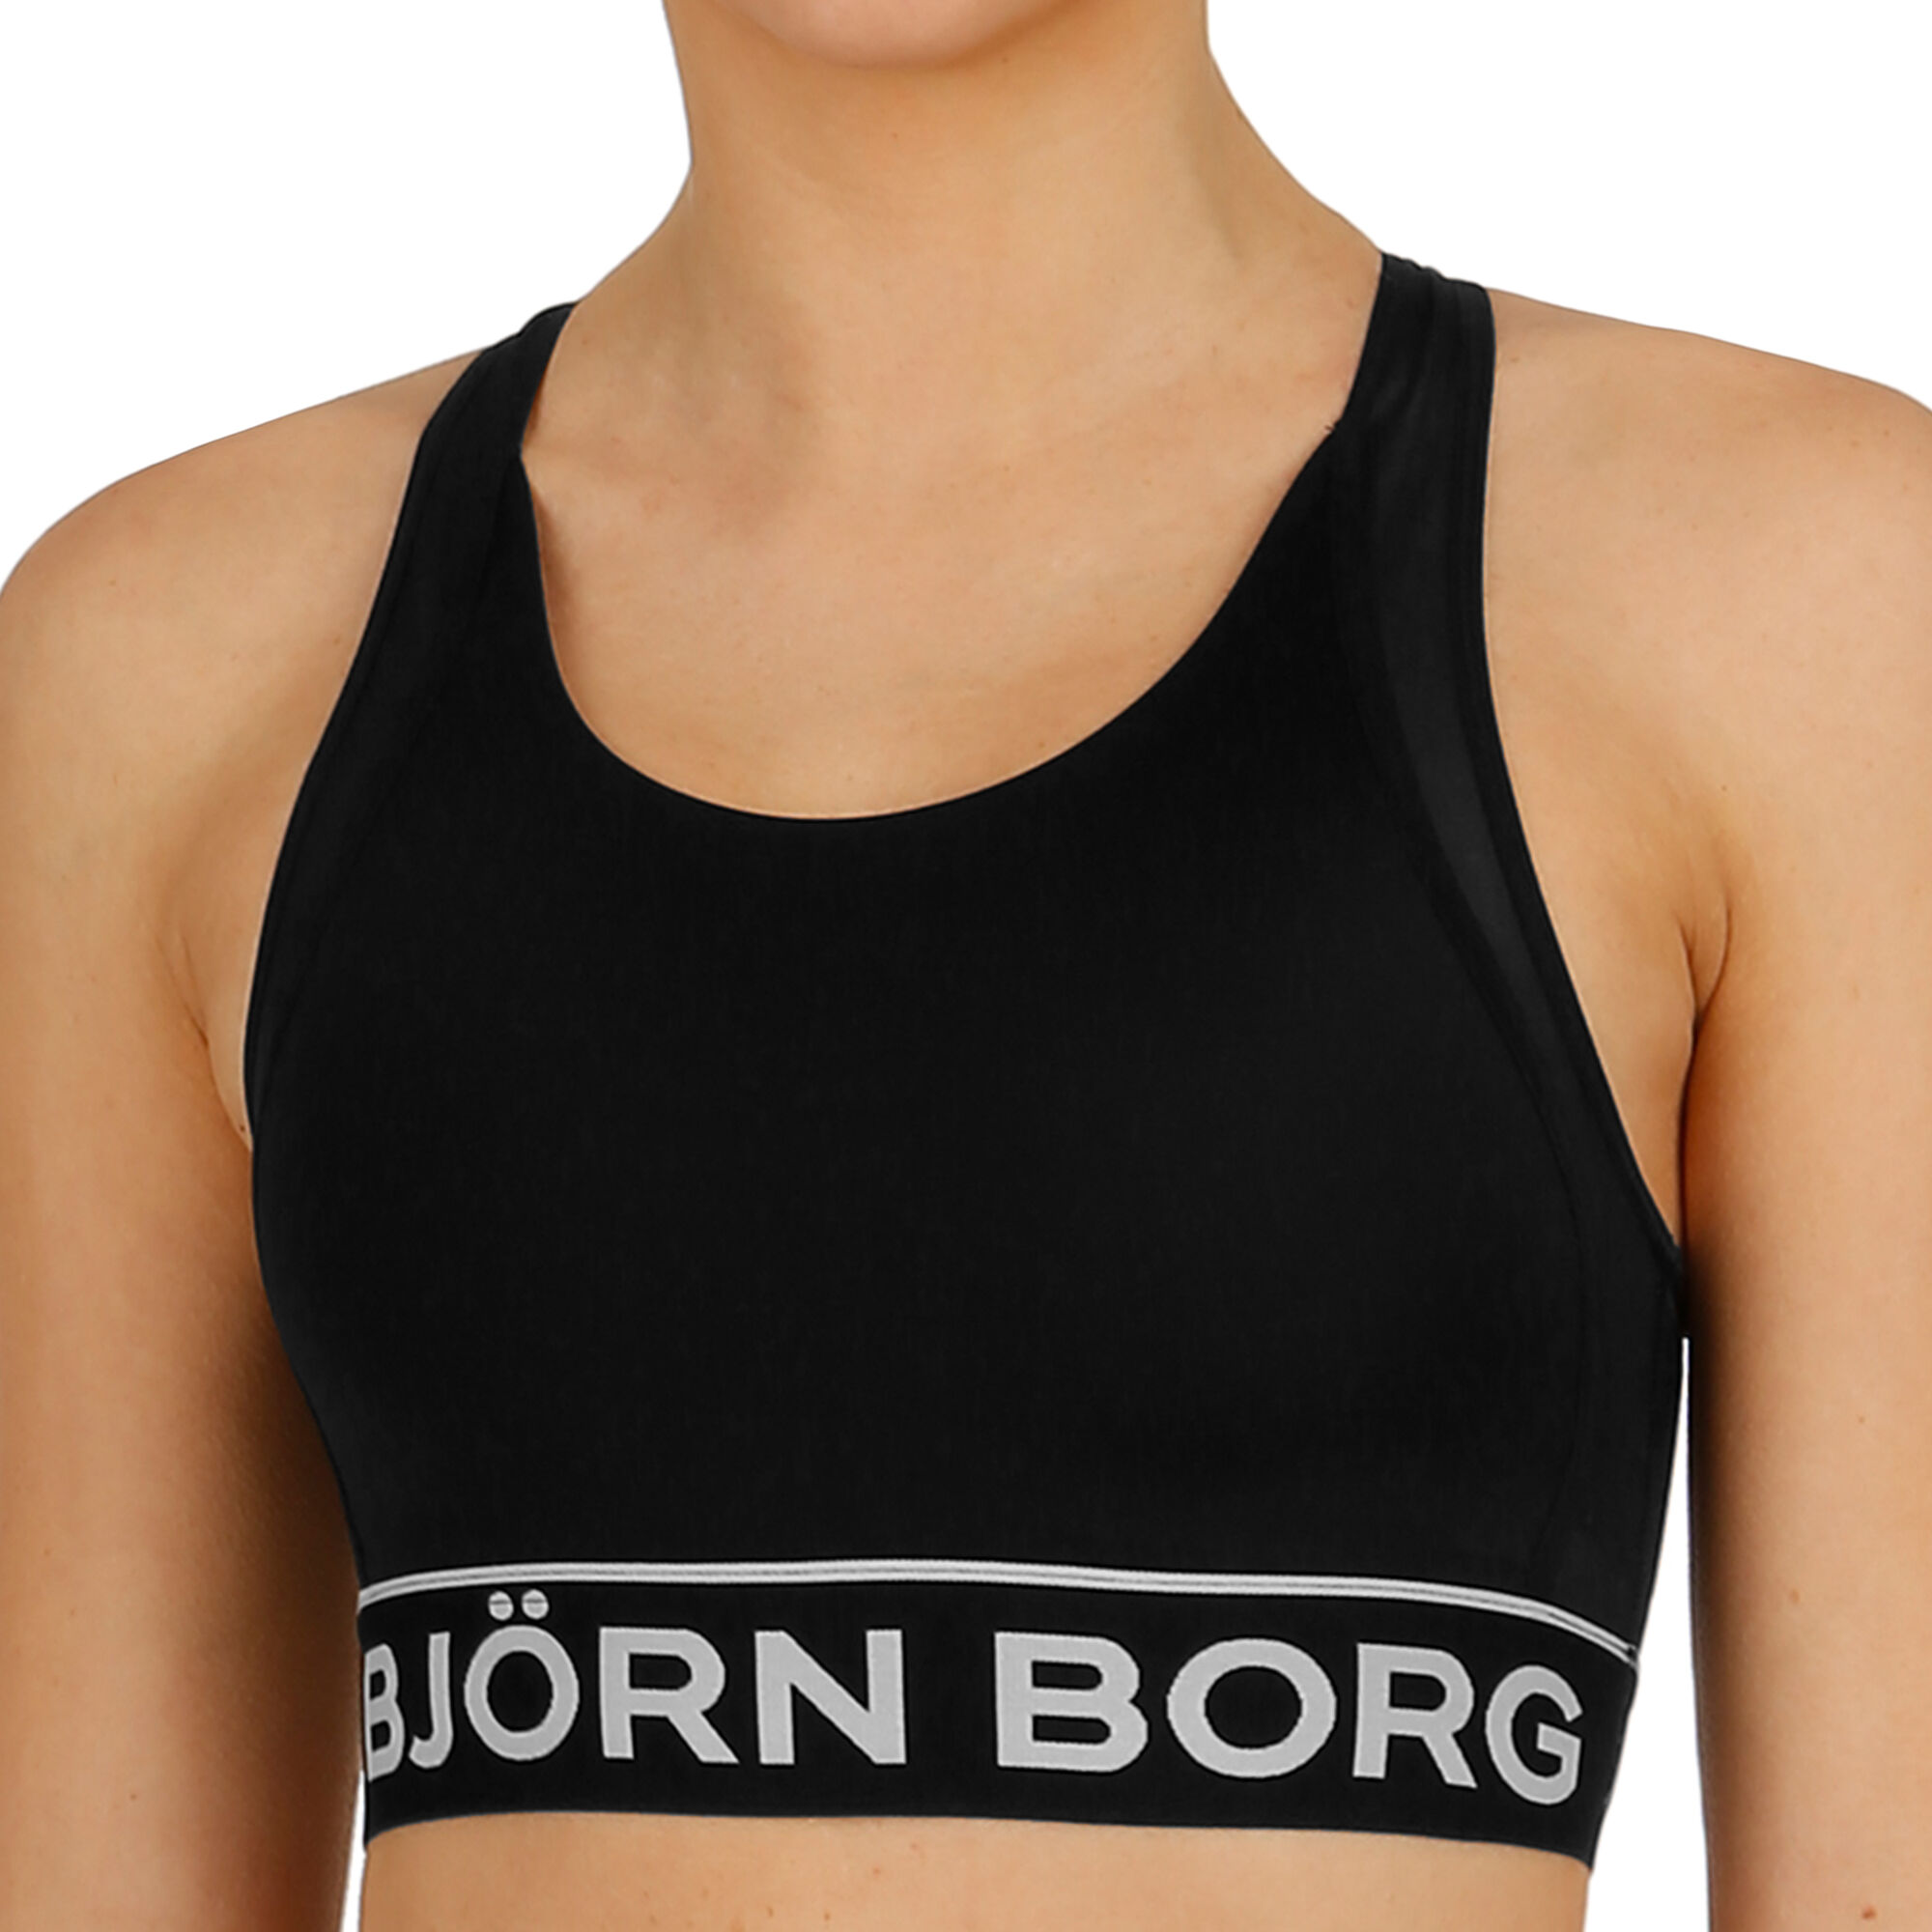 Björn Borg Borg Running High Support Bra - Sports bras